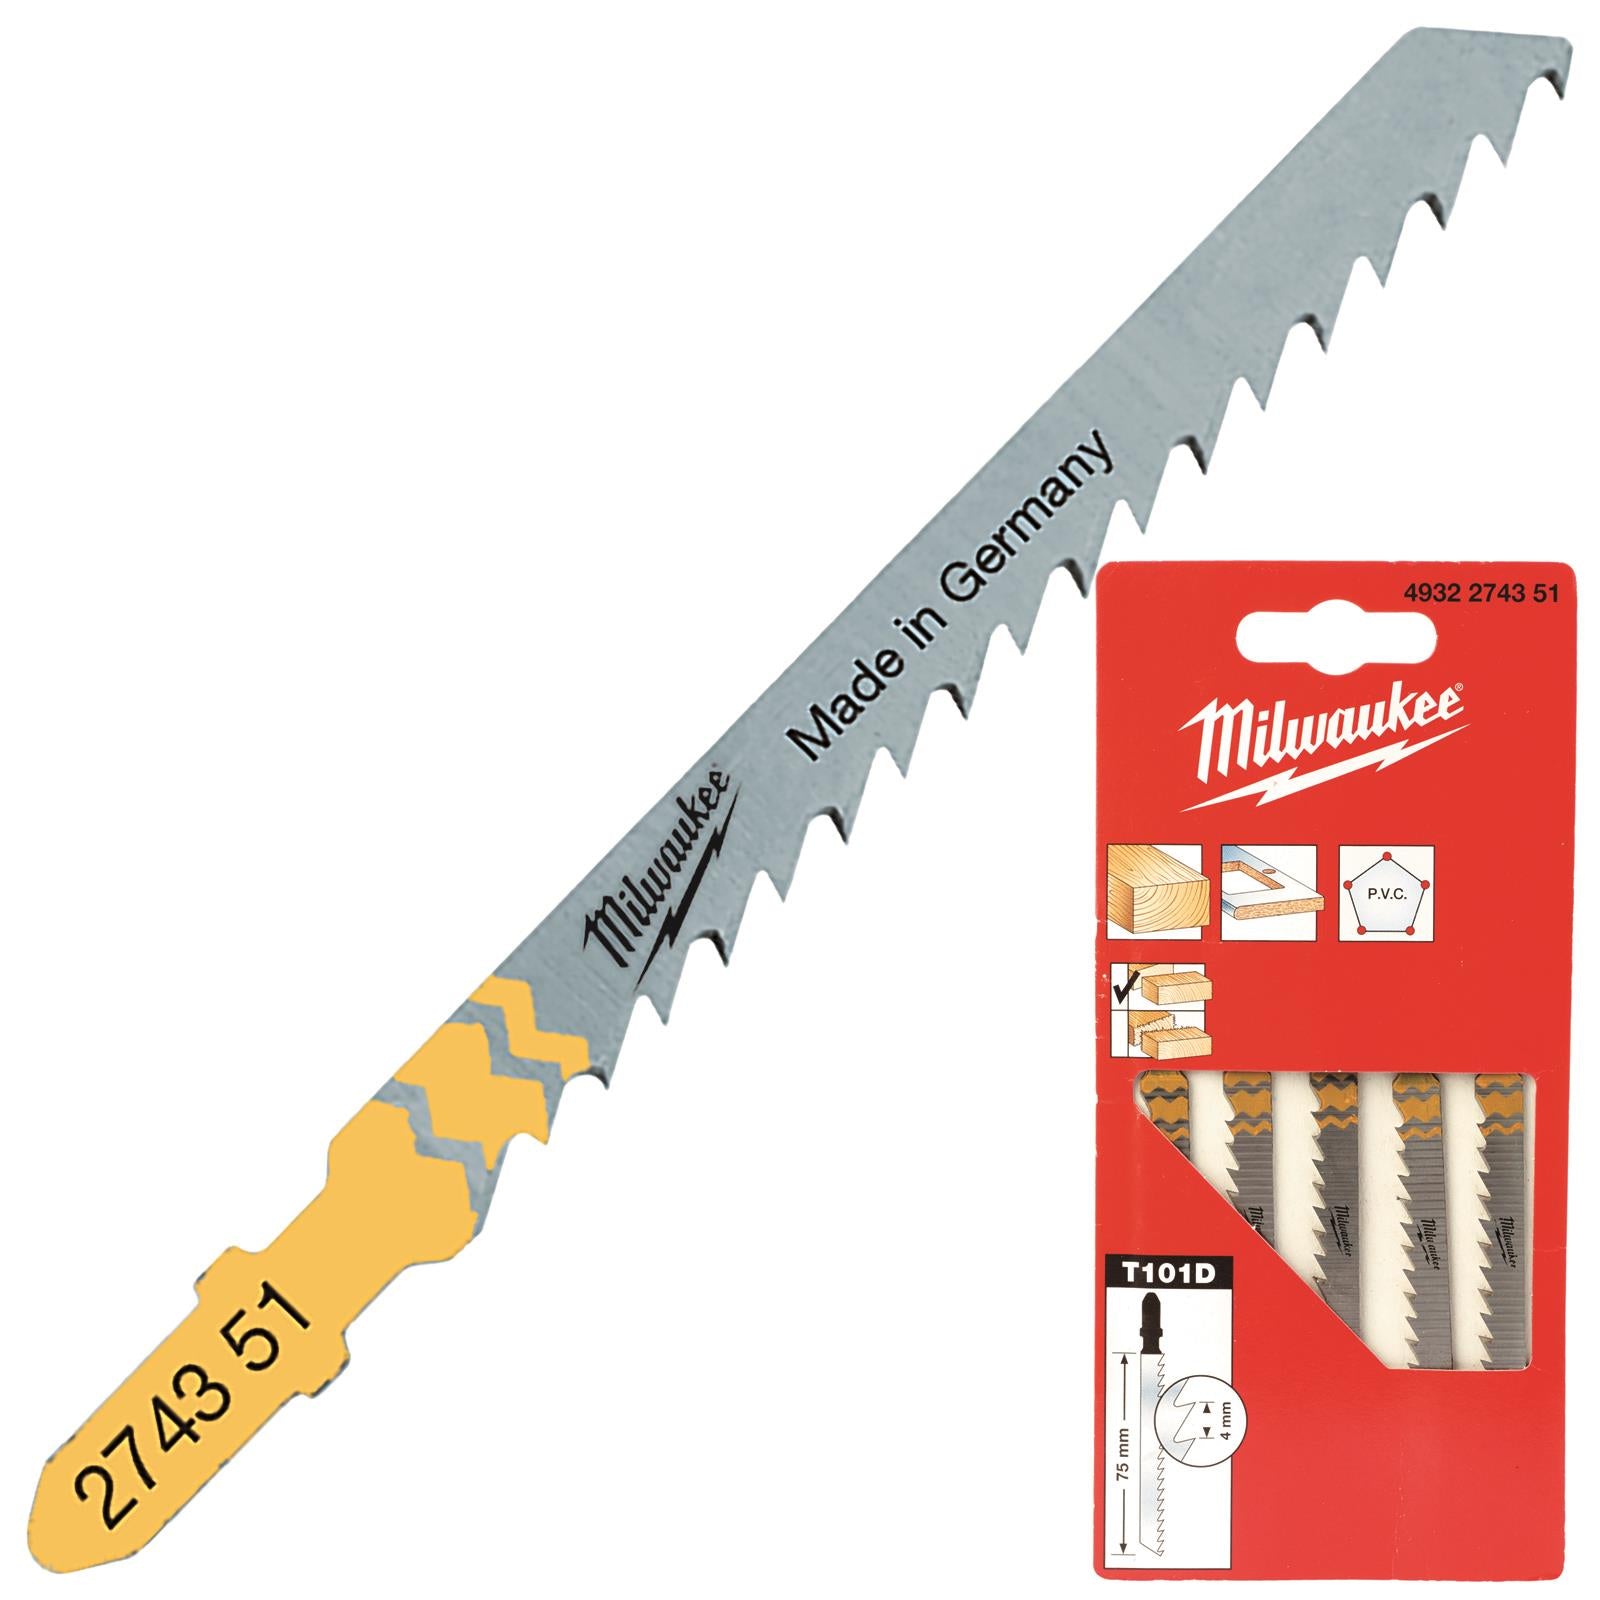 Milwaukee Jigsaw Blades Wood and Plastic 5 Pack Clean Cut 75mm x 4mm T101D